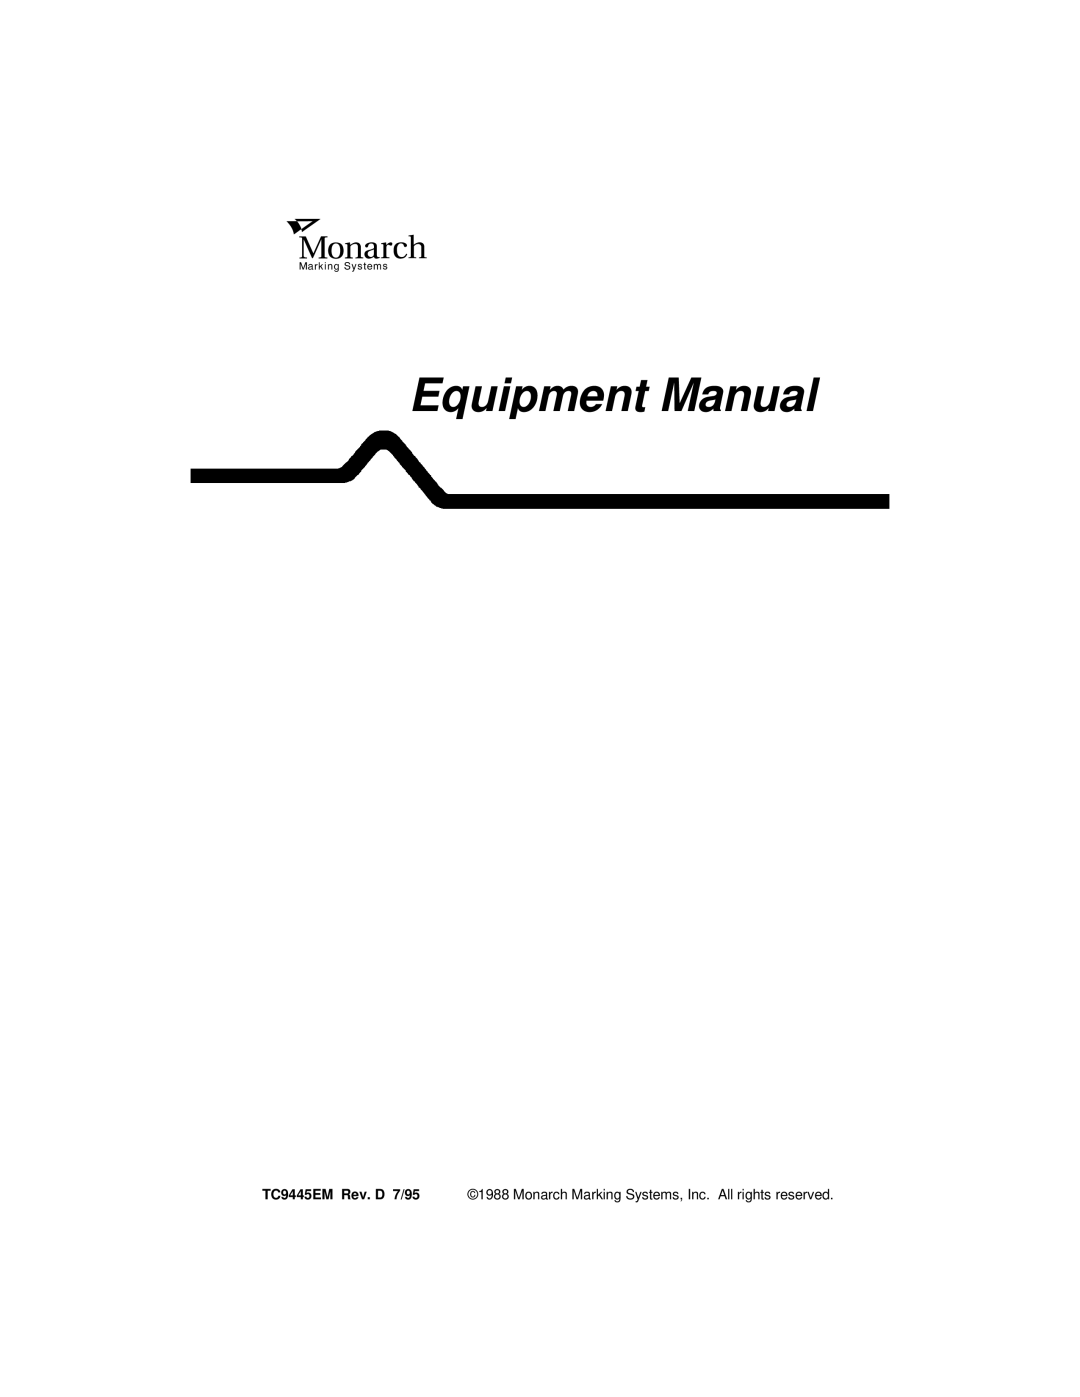 Paxar 9445 manual Equipment Manual 